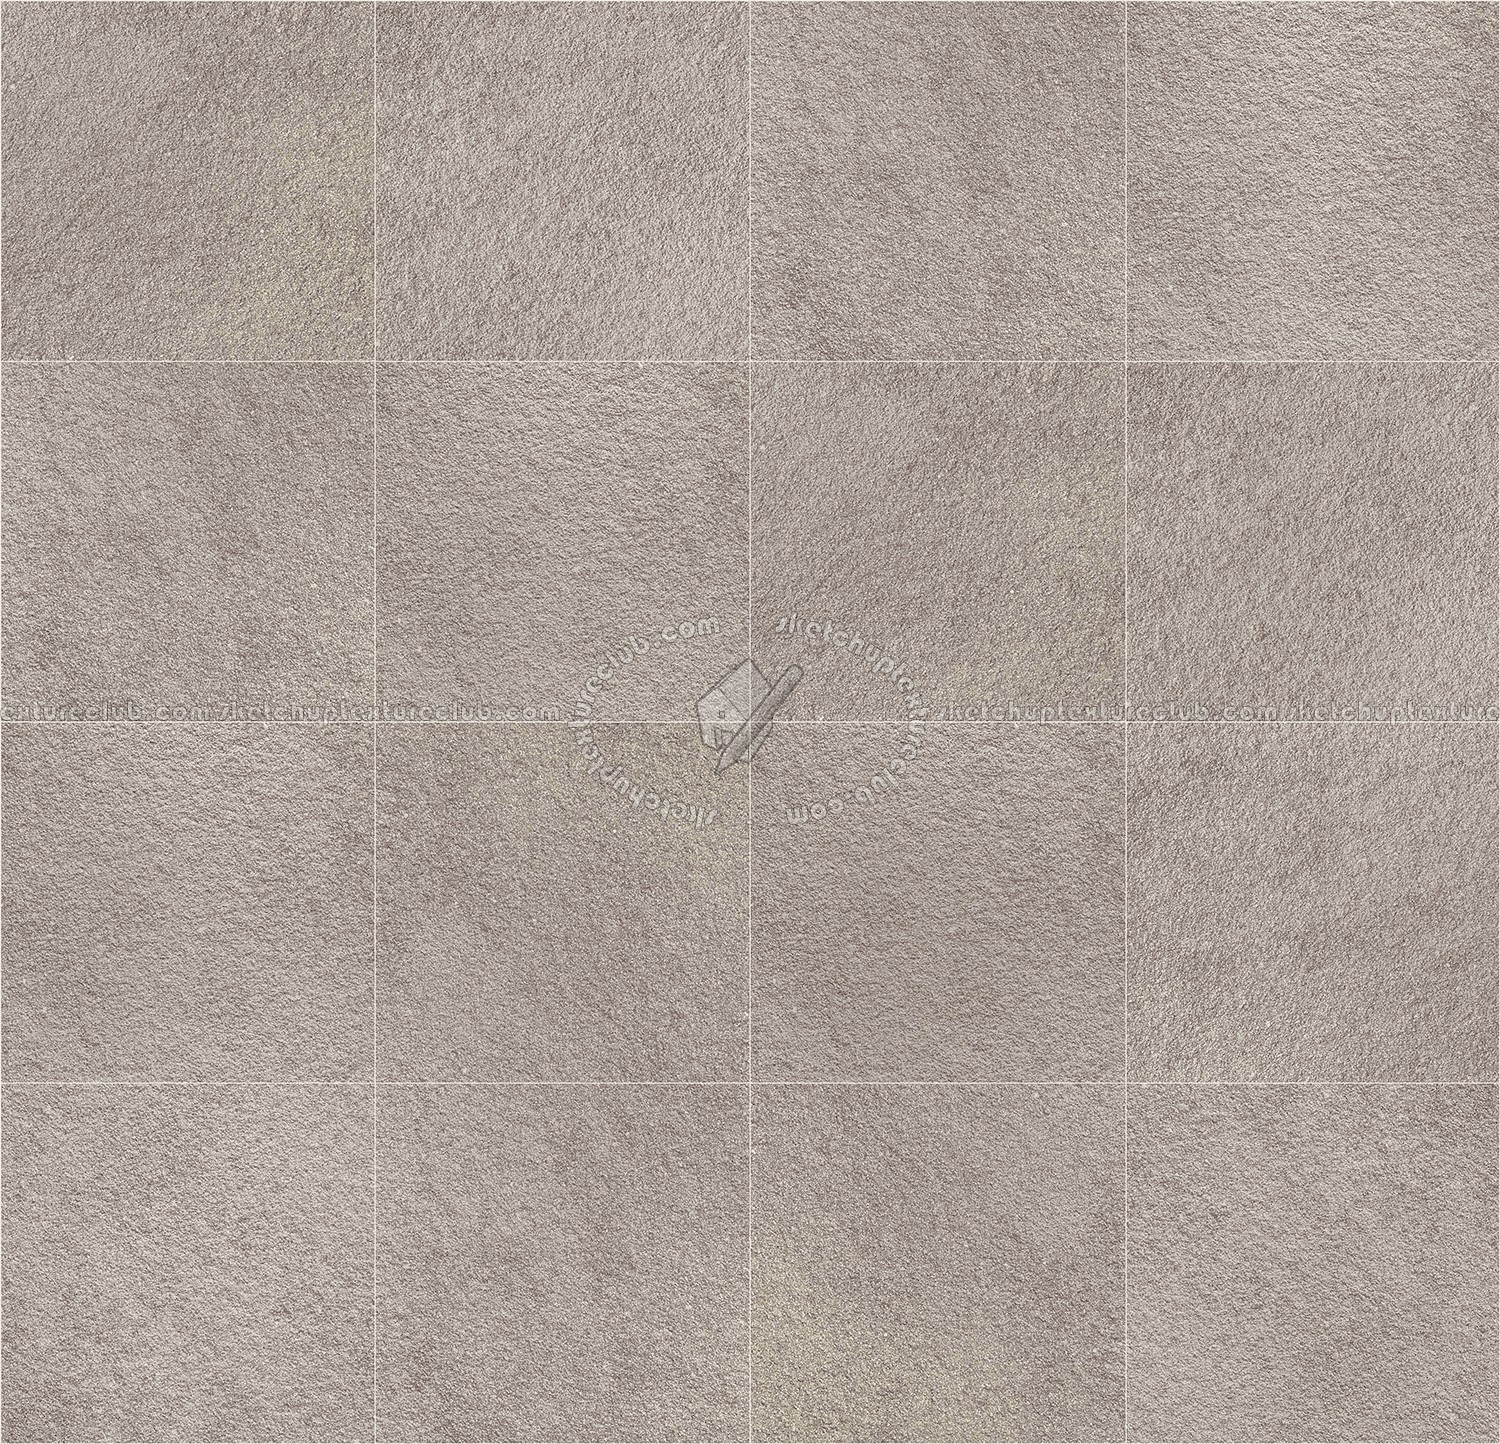 Square stone tile cm120x120 texture seamless 15974